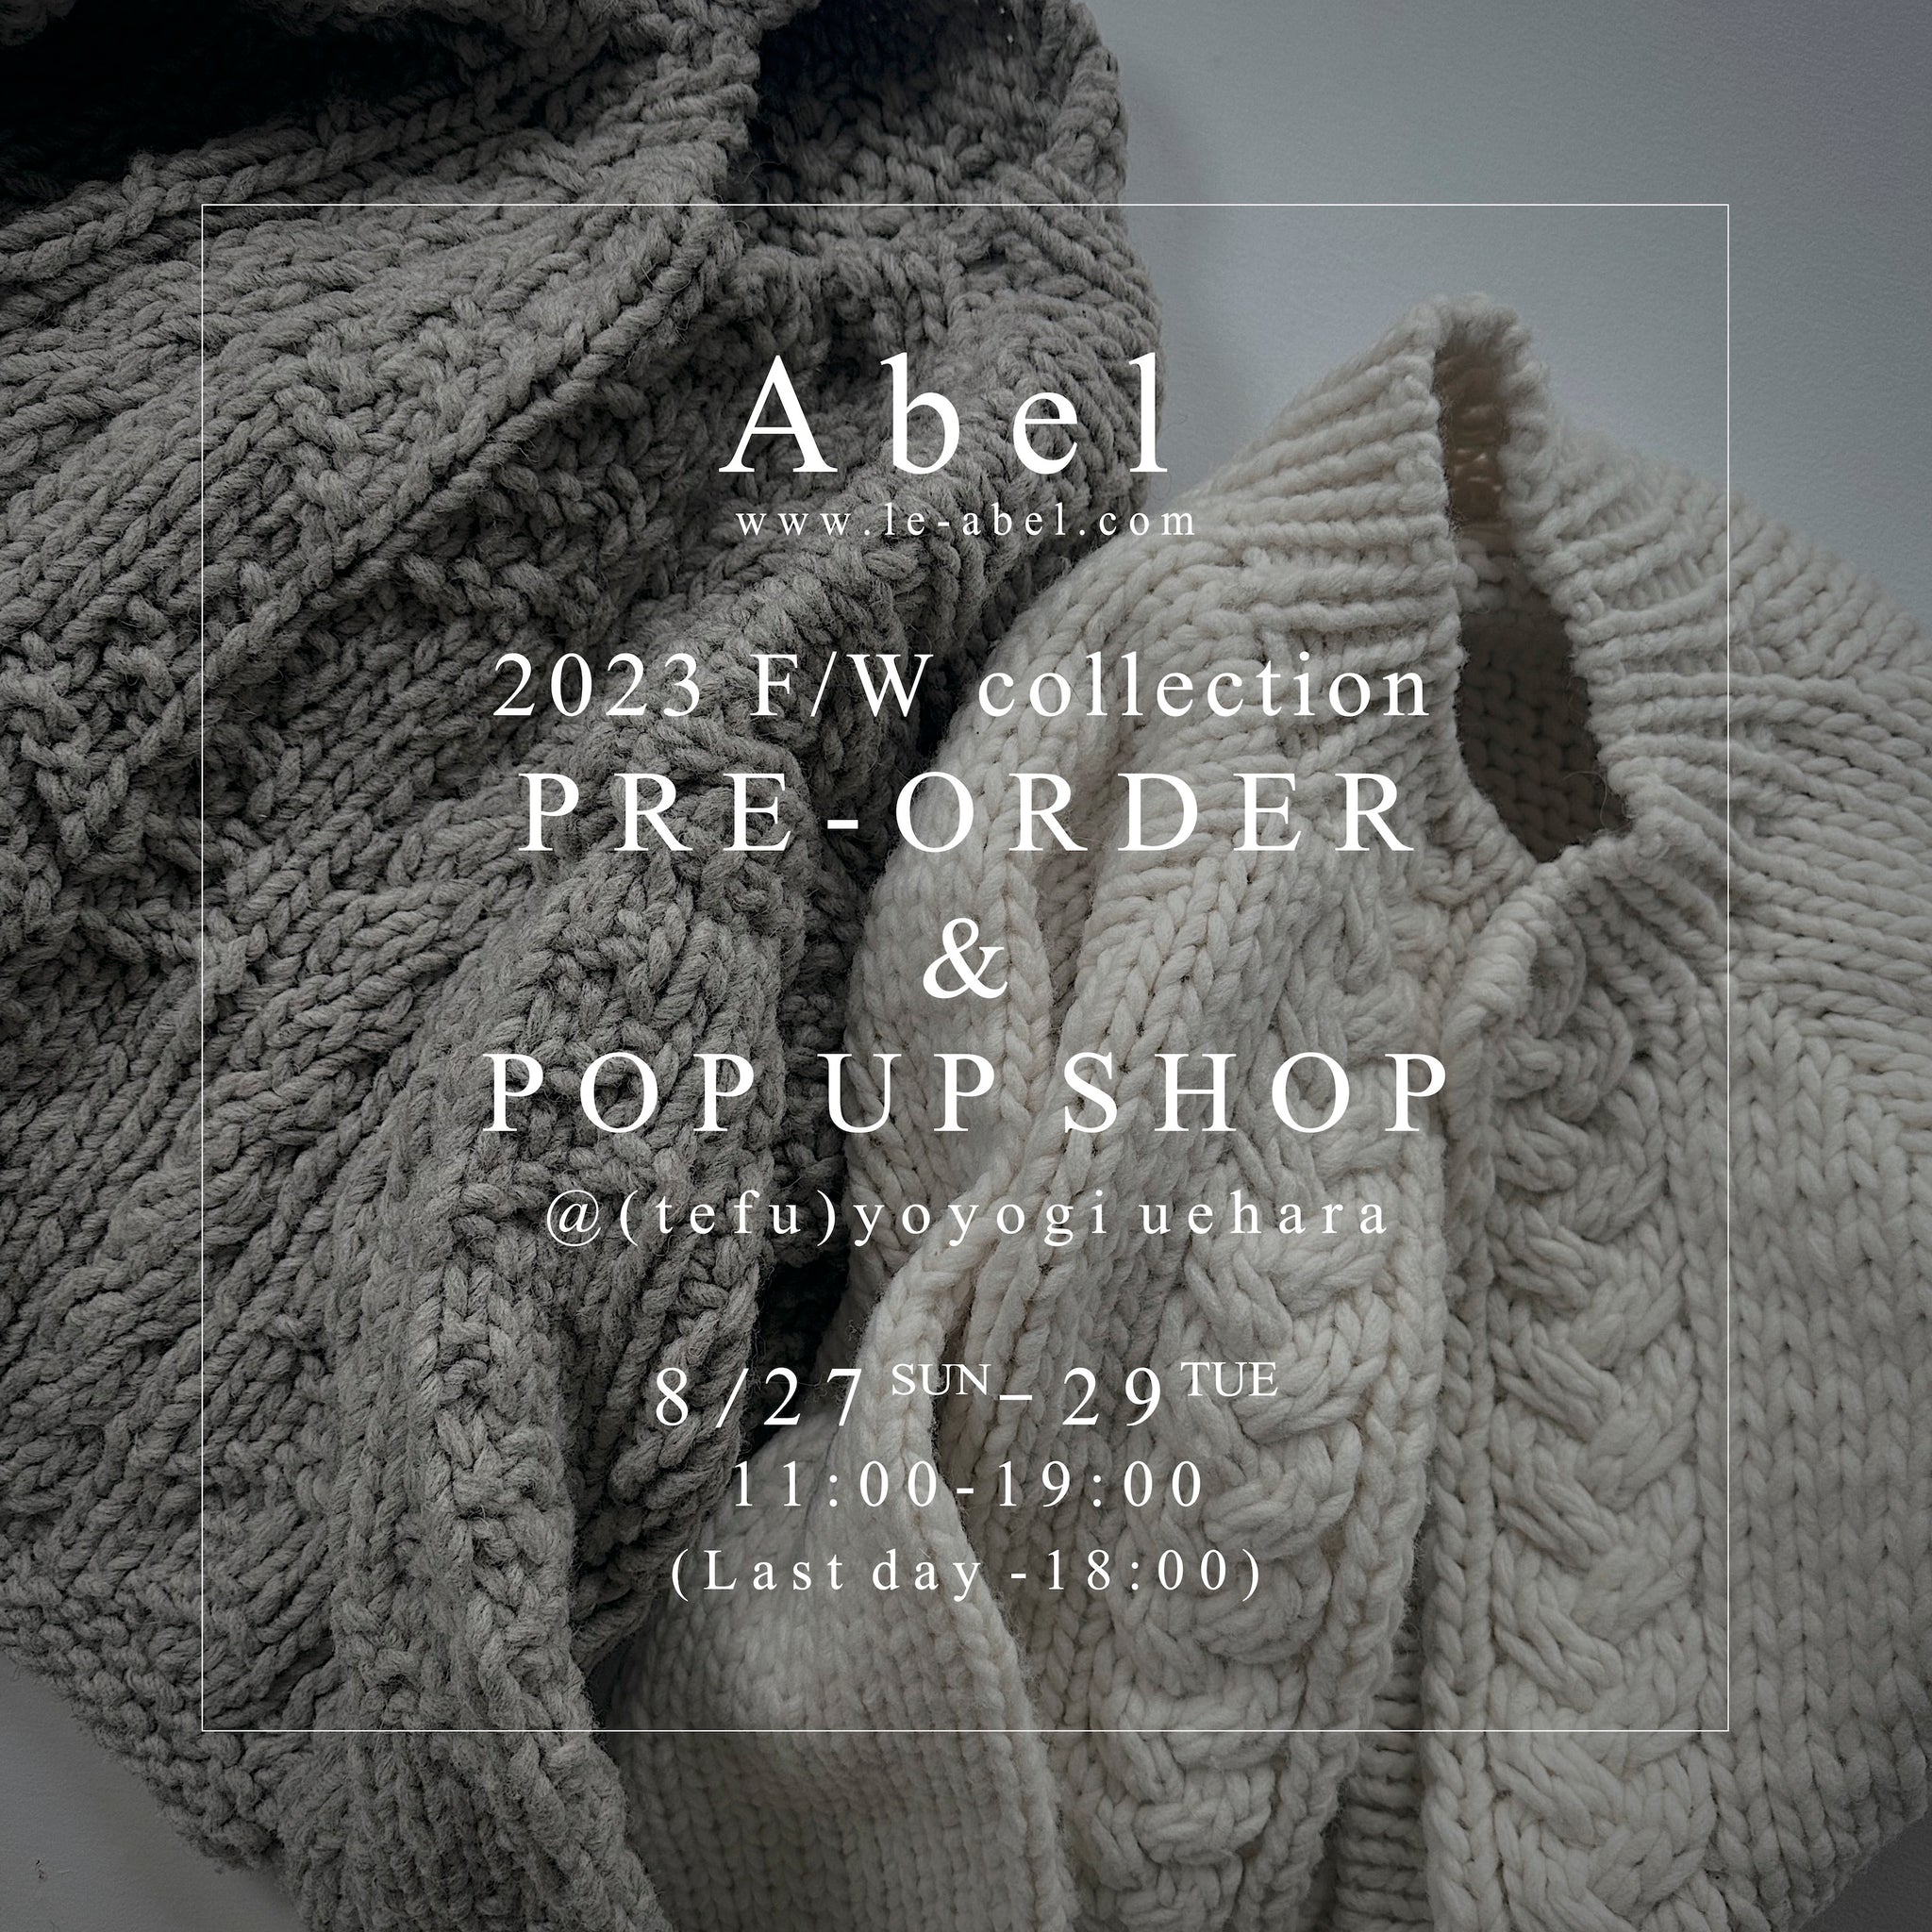 【Abel ’23 F/W collection PRE-ORDER & POP UP SHOP】